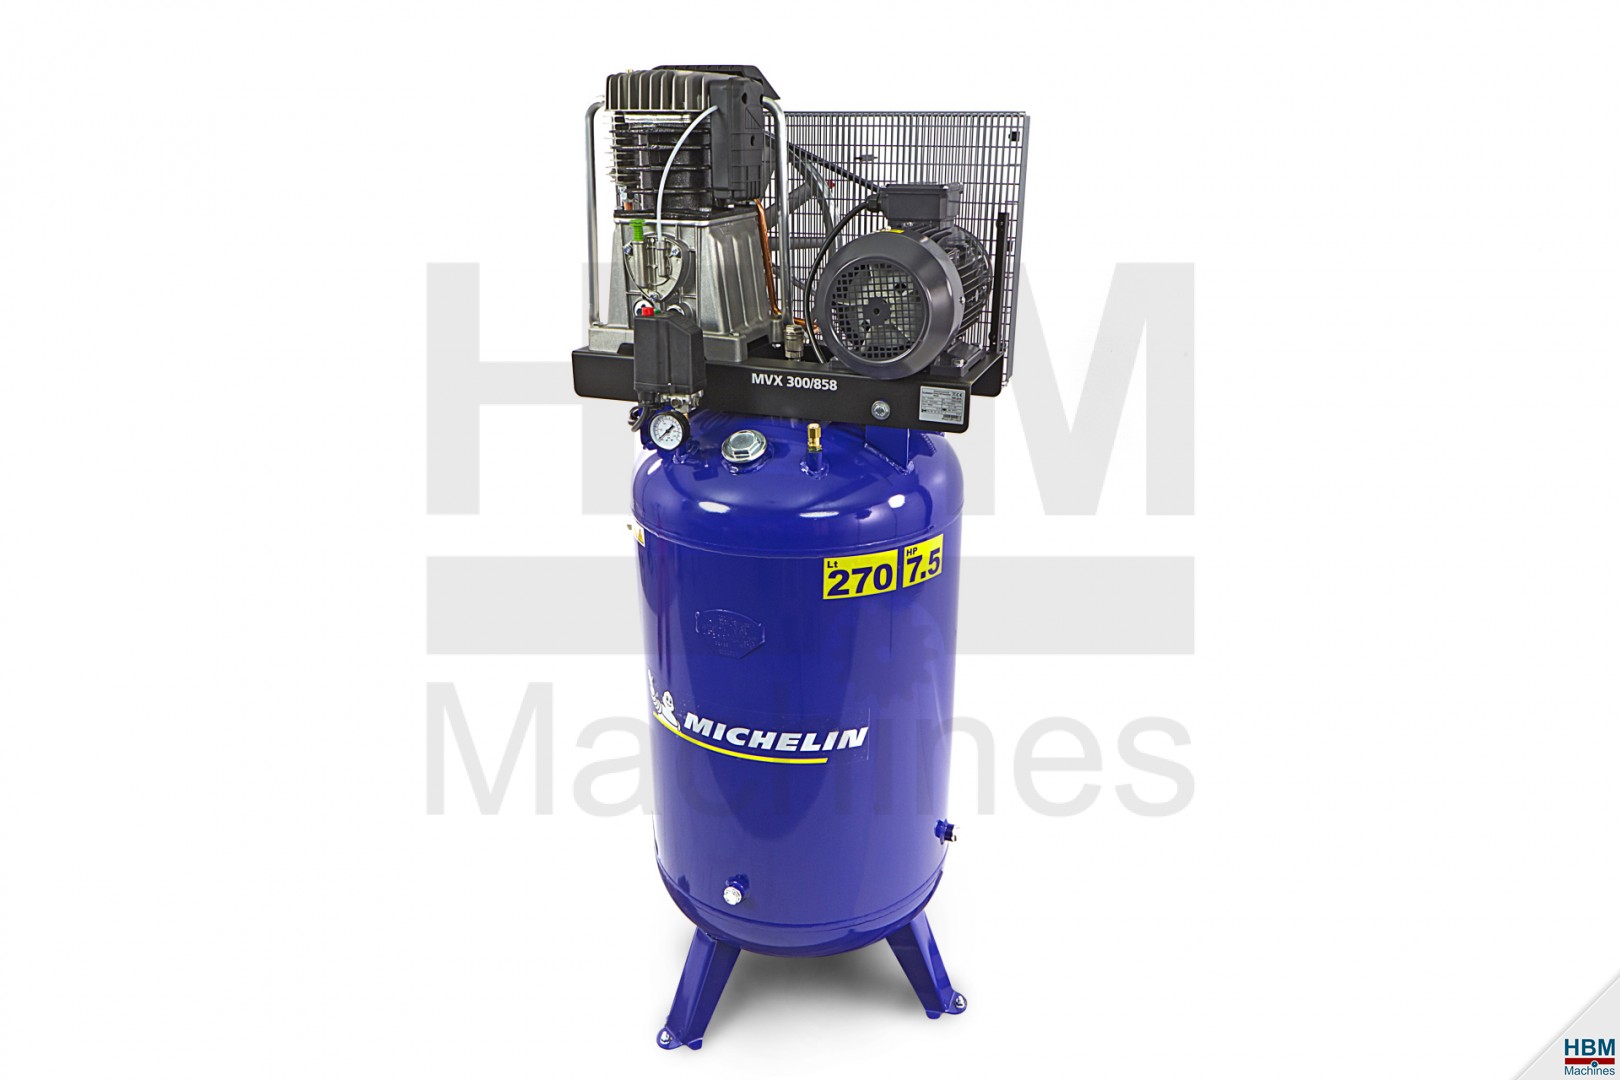 Kinematica binnenplaats positie Michelin 270 Liter Verticale Compressor 7,5 Pk | HBM Machines